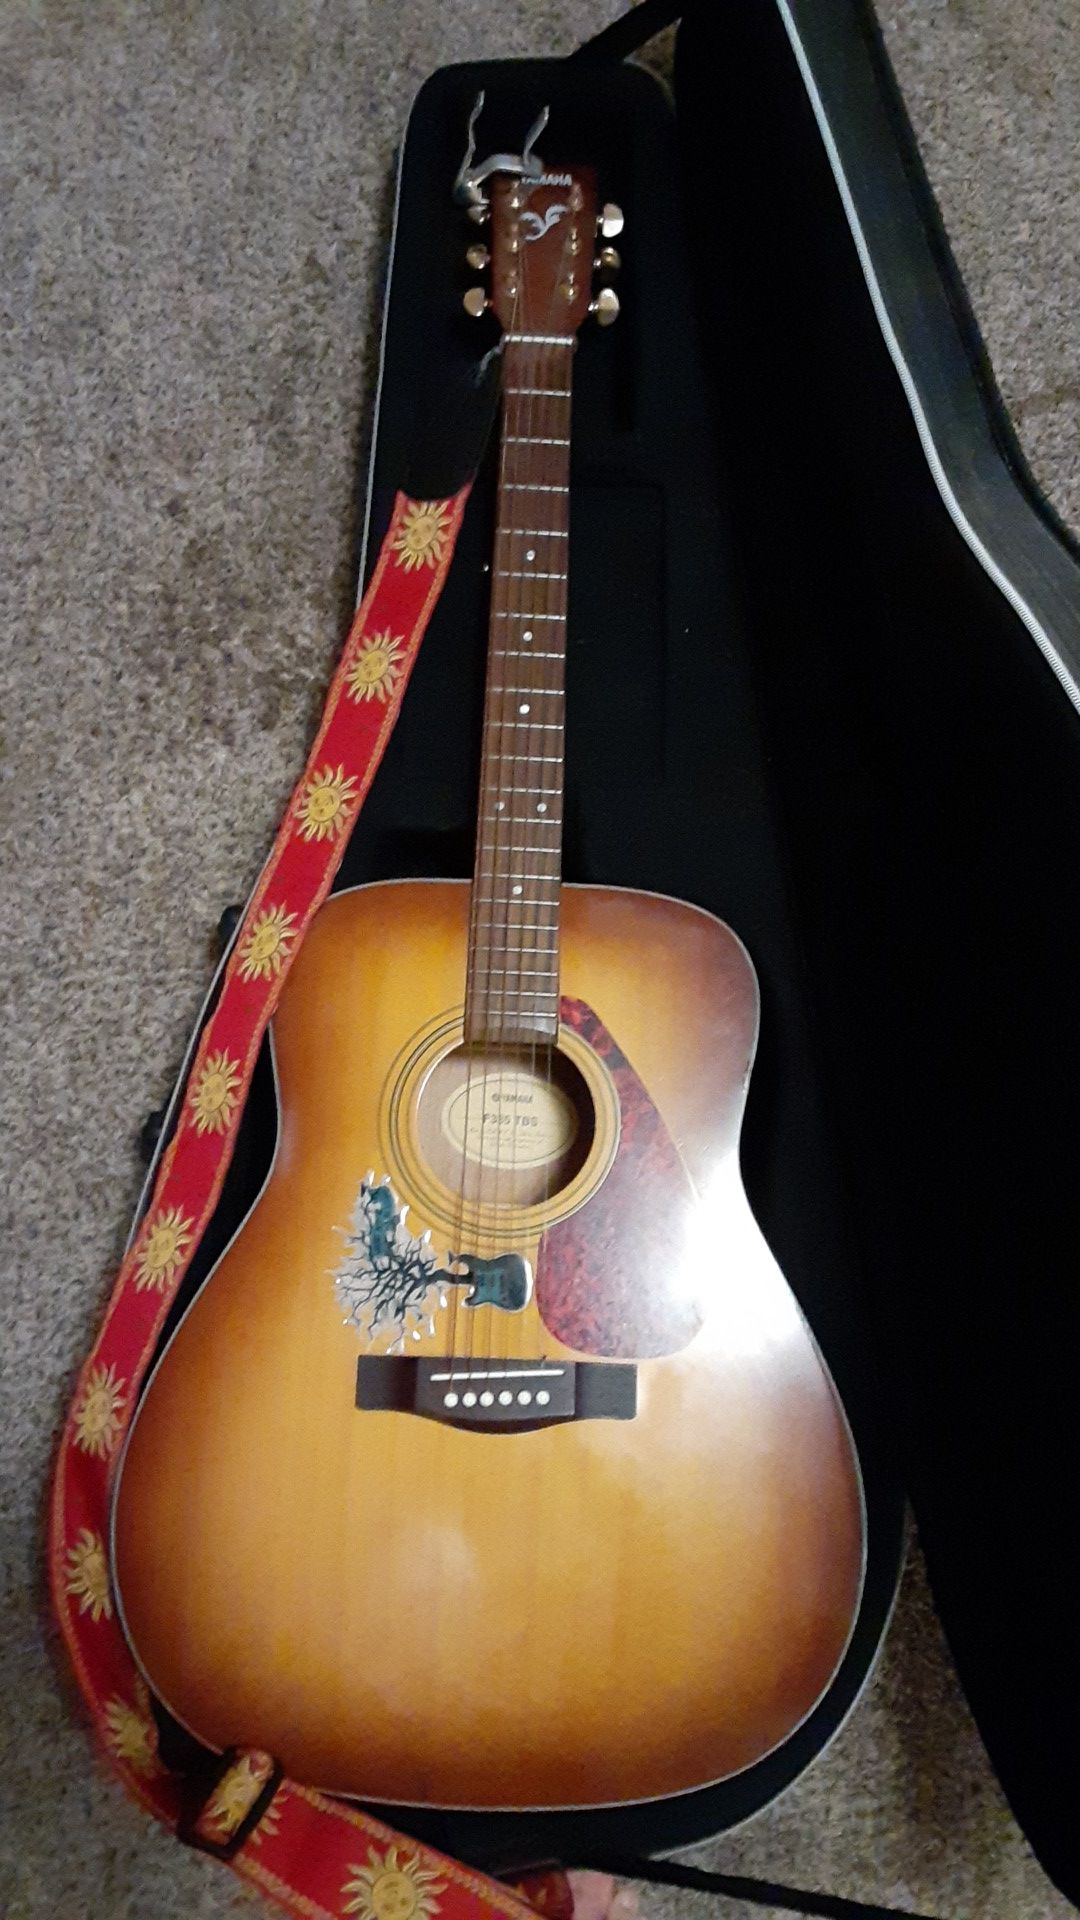 Yamaha guitar w/ Road Runner case